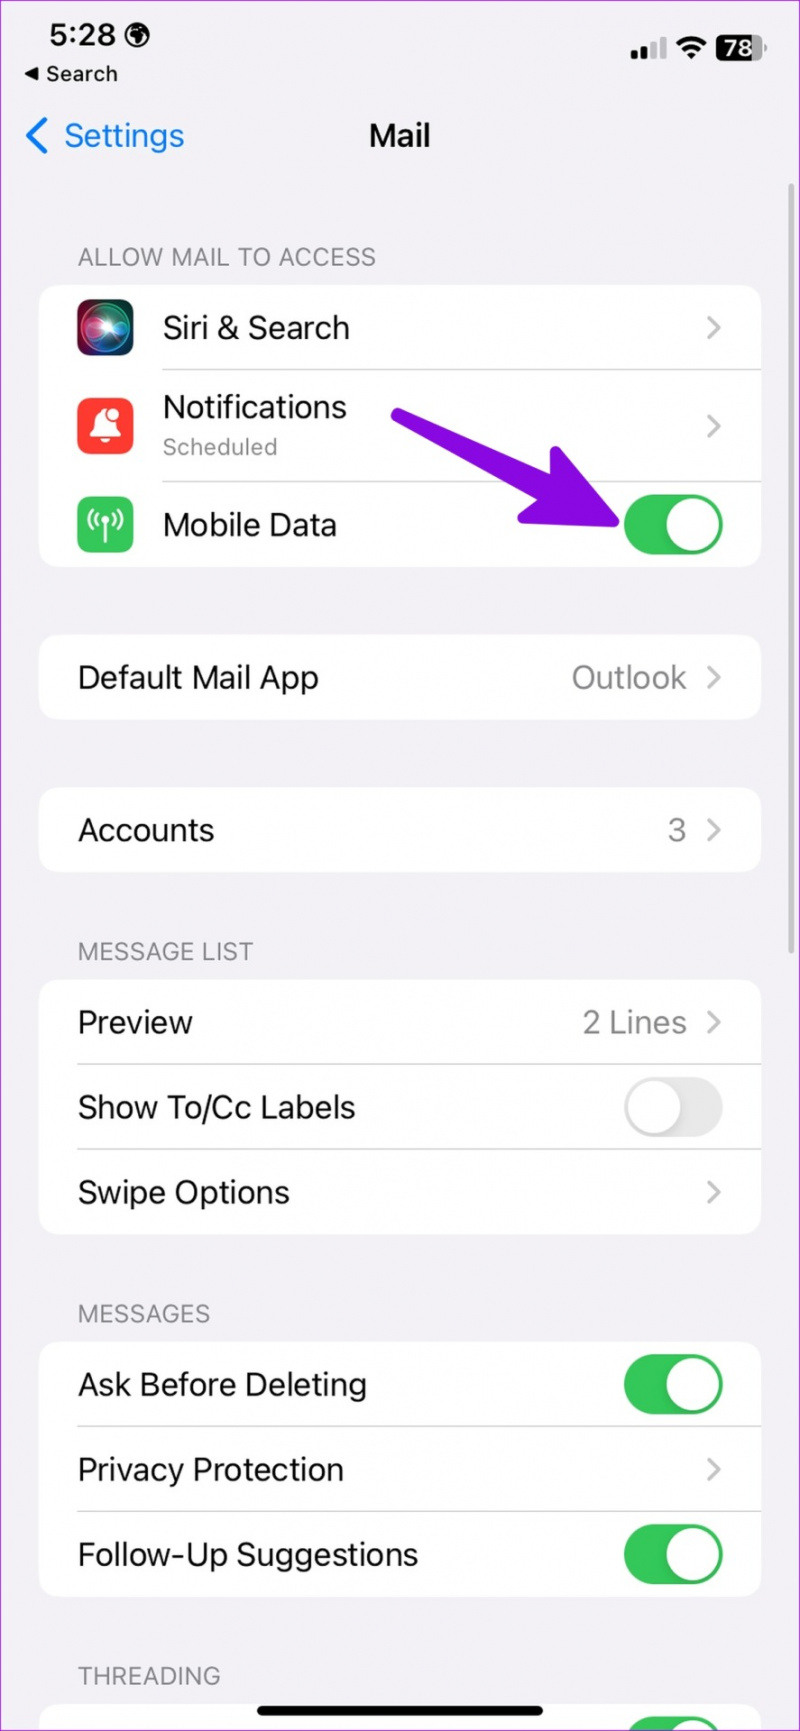   aktivere mobildata for e-post